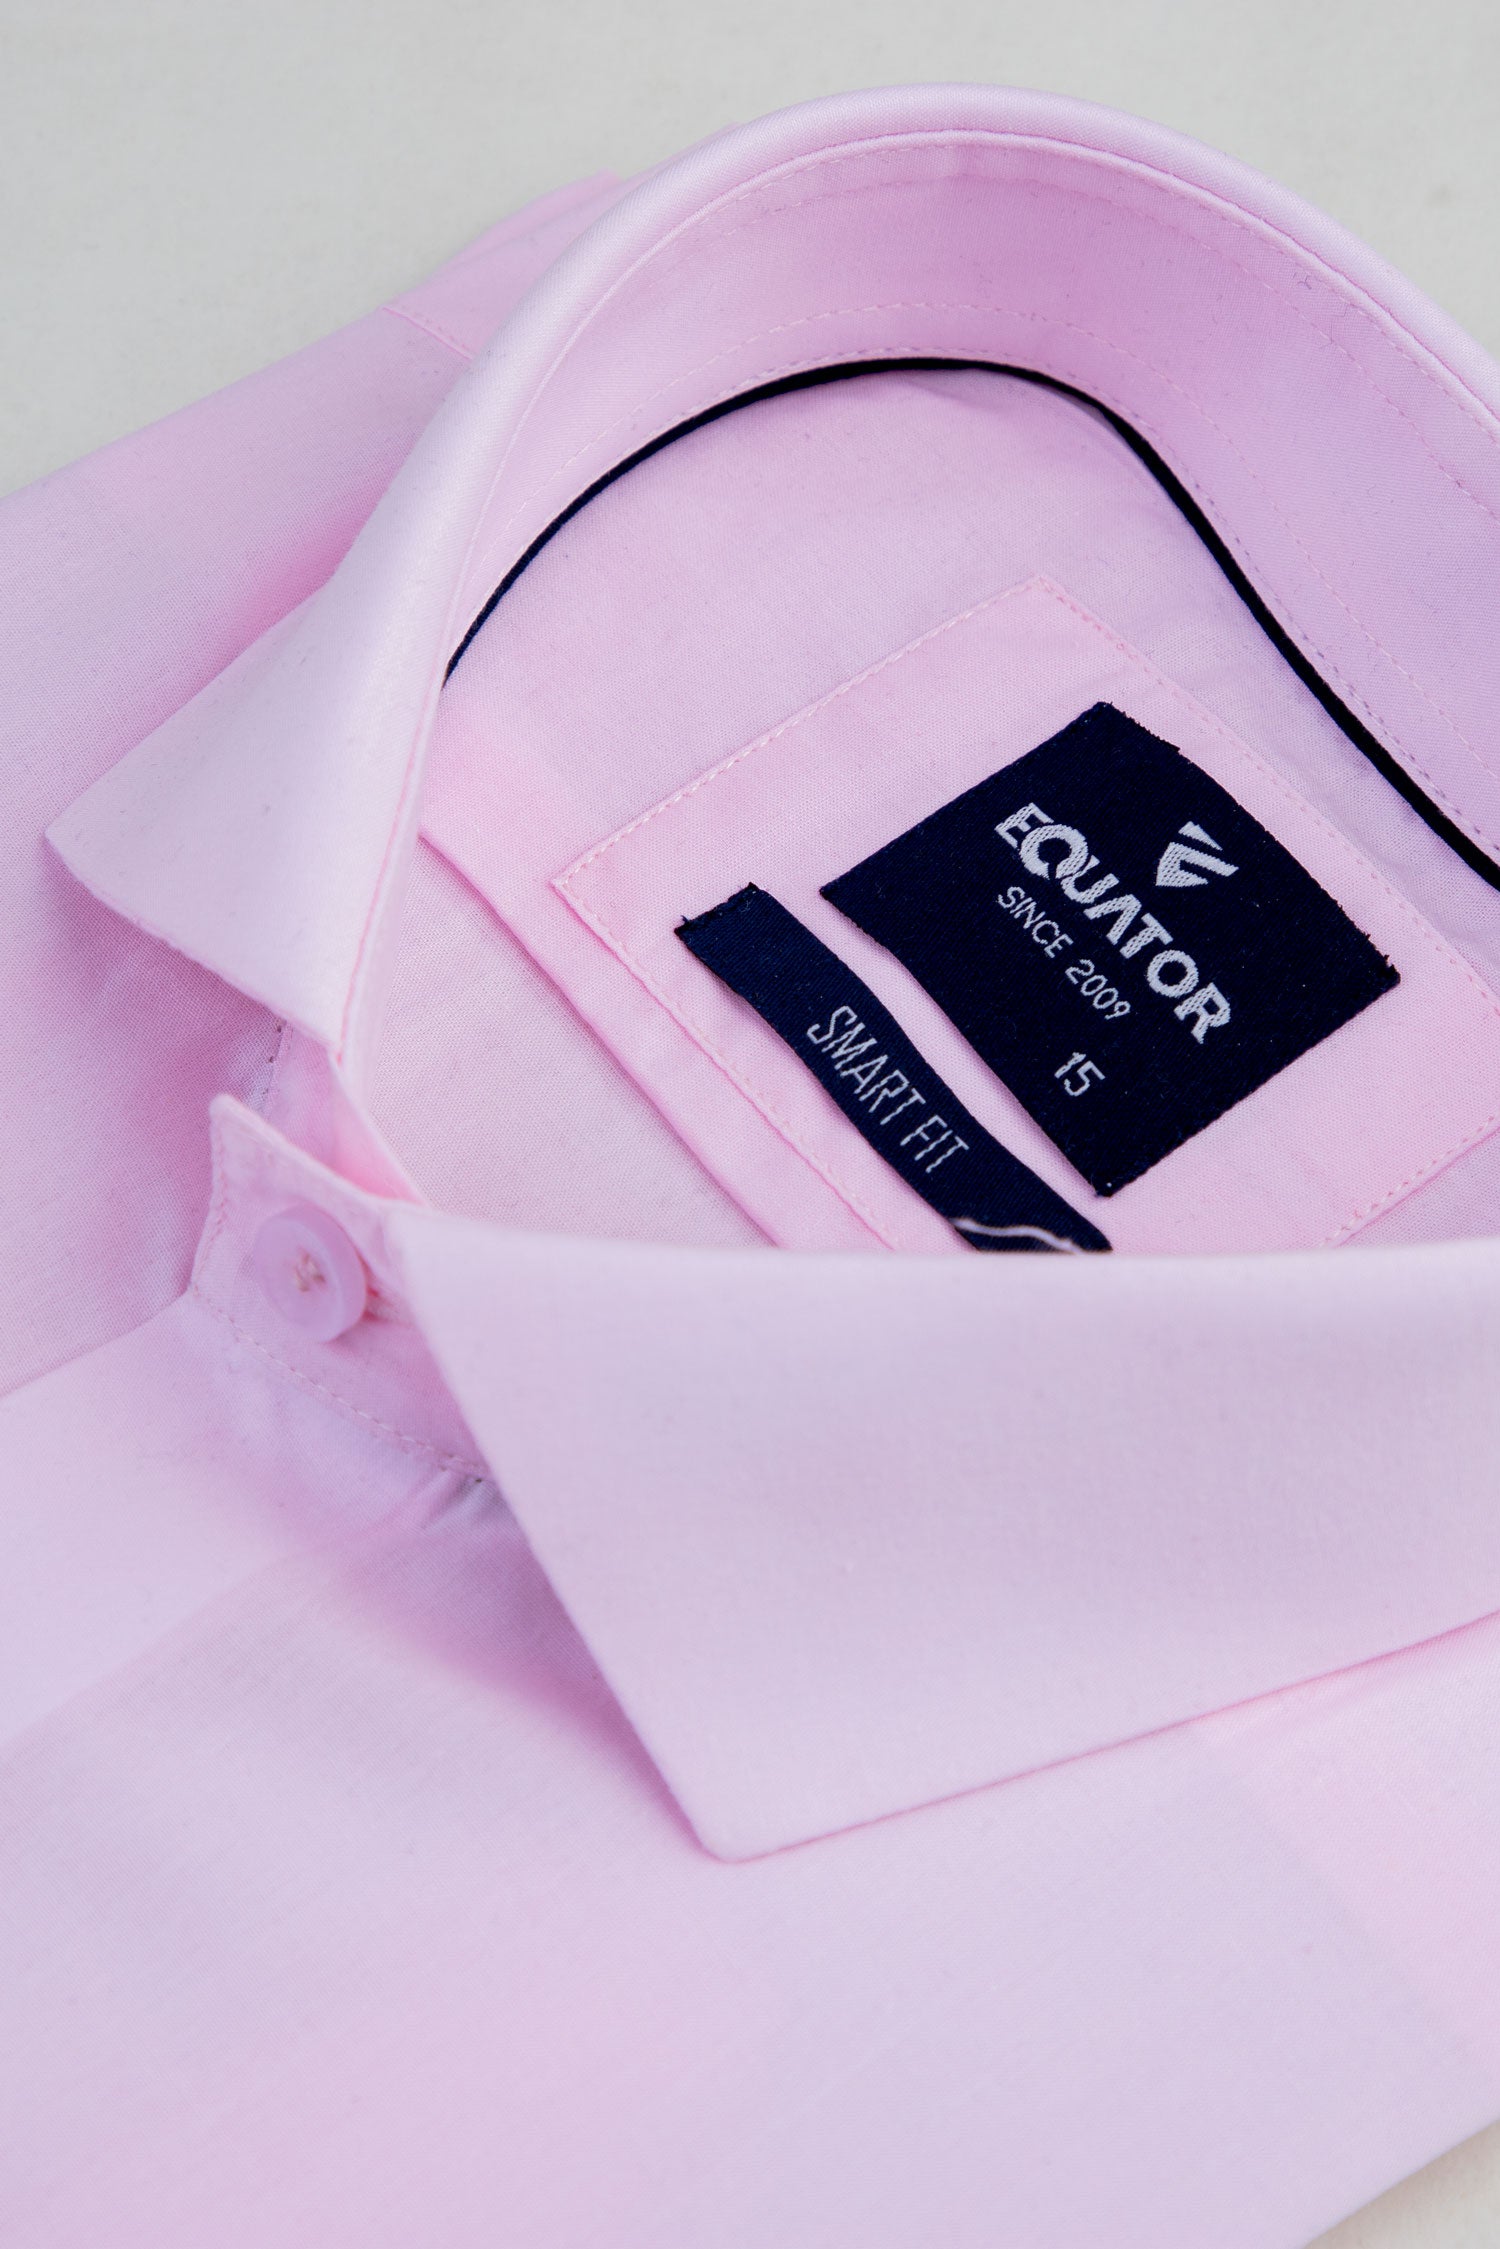 Pink Formal Dress Shirt